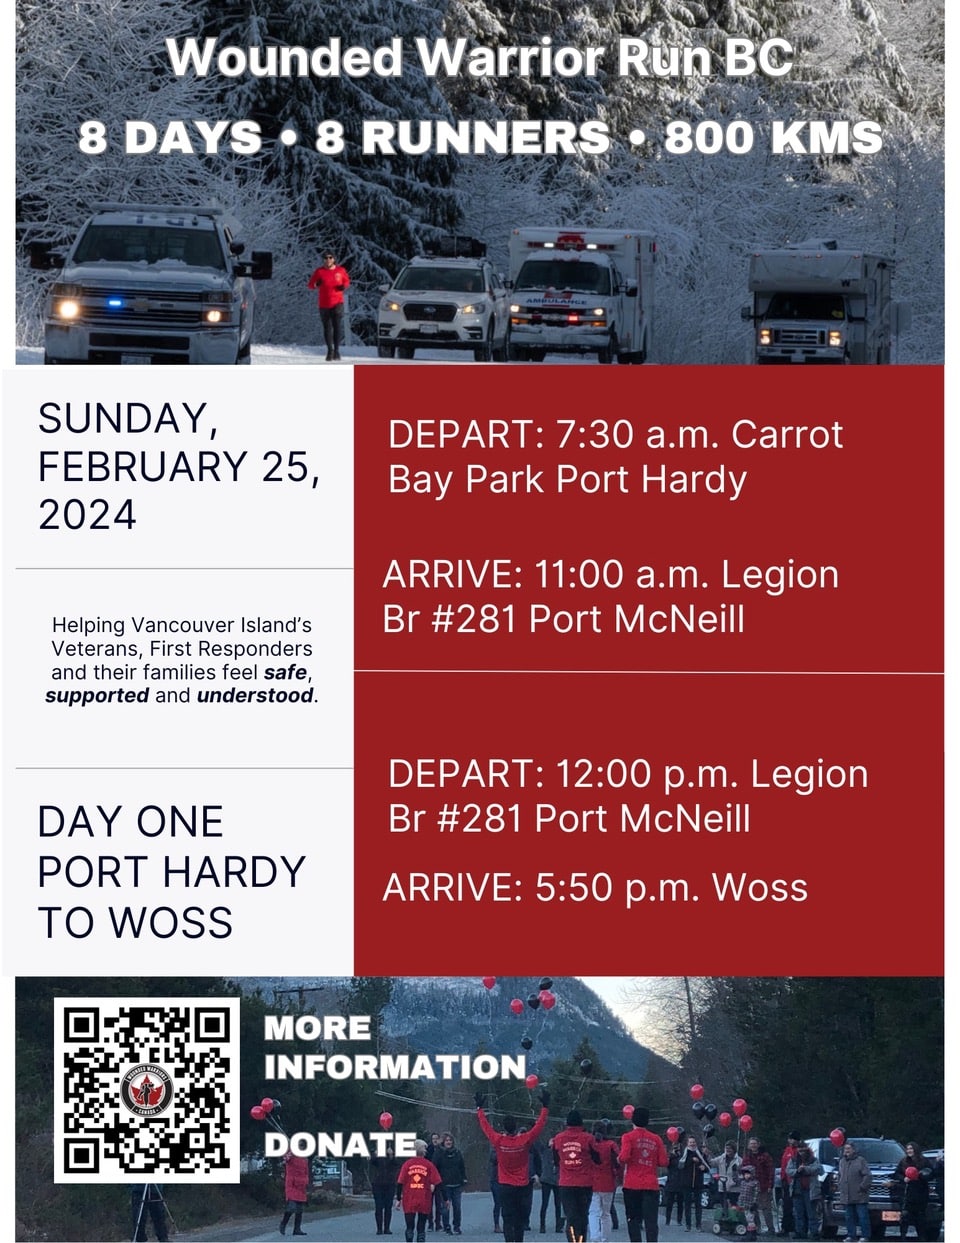 Wounded Warriors Run BC - Sunday February 25, 2024